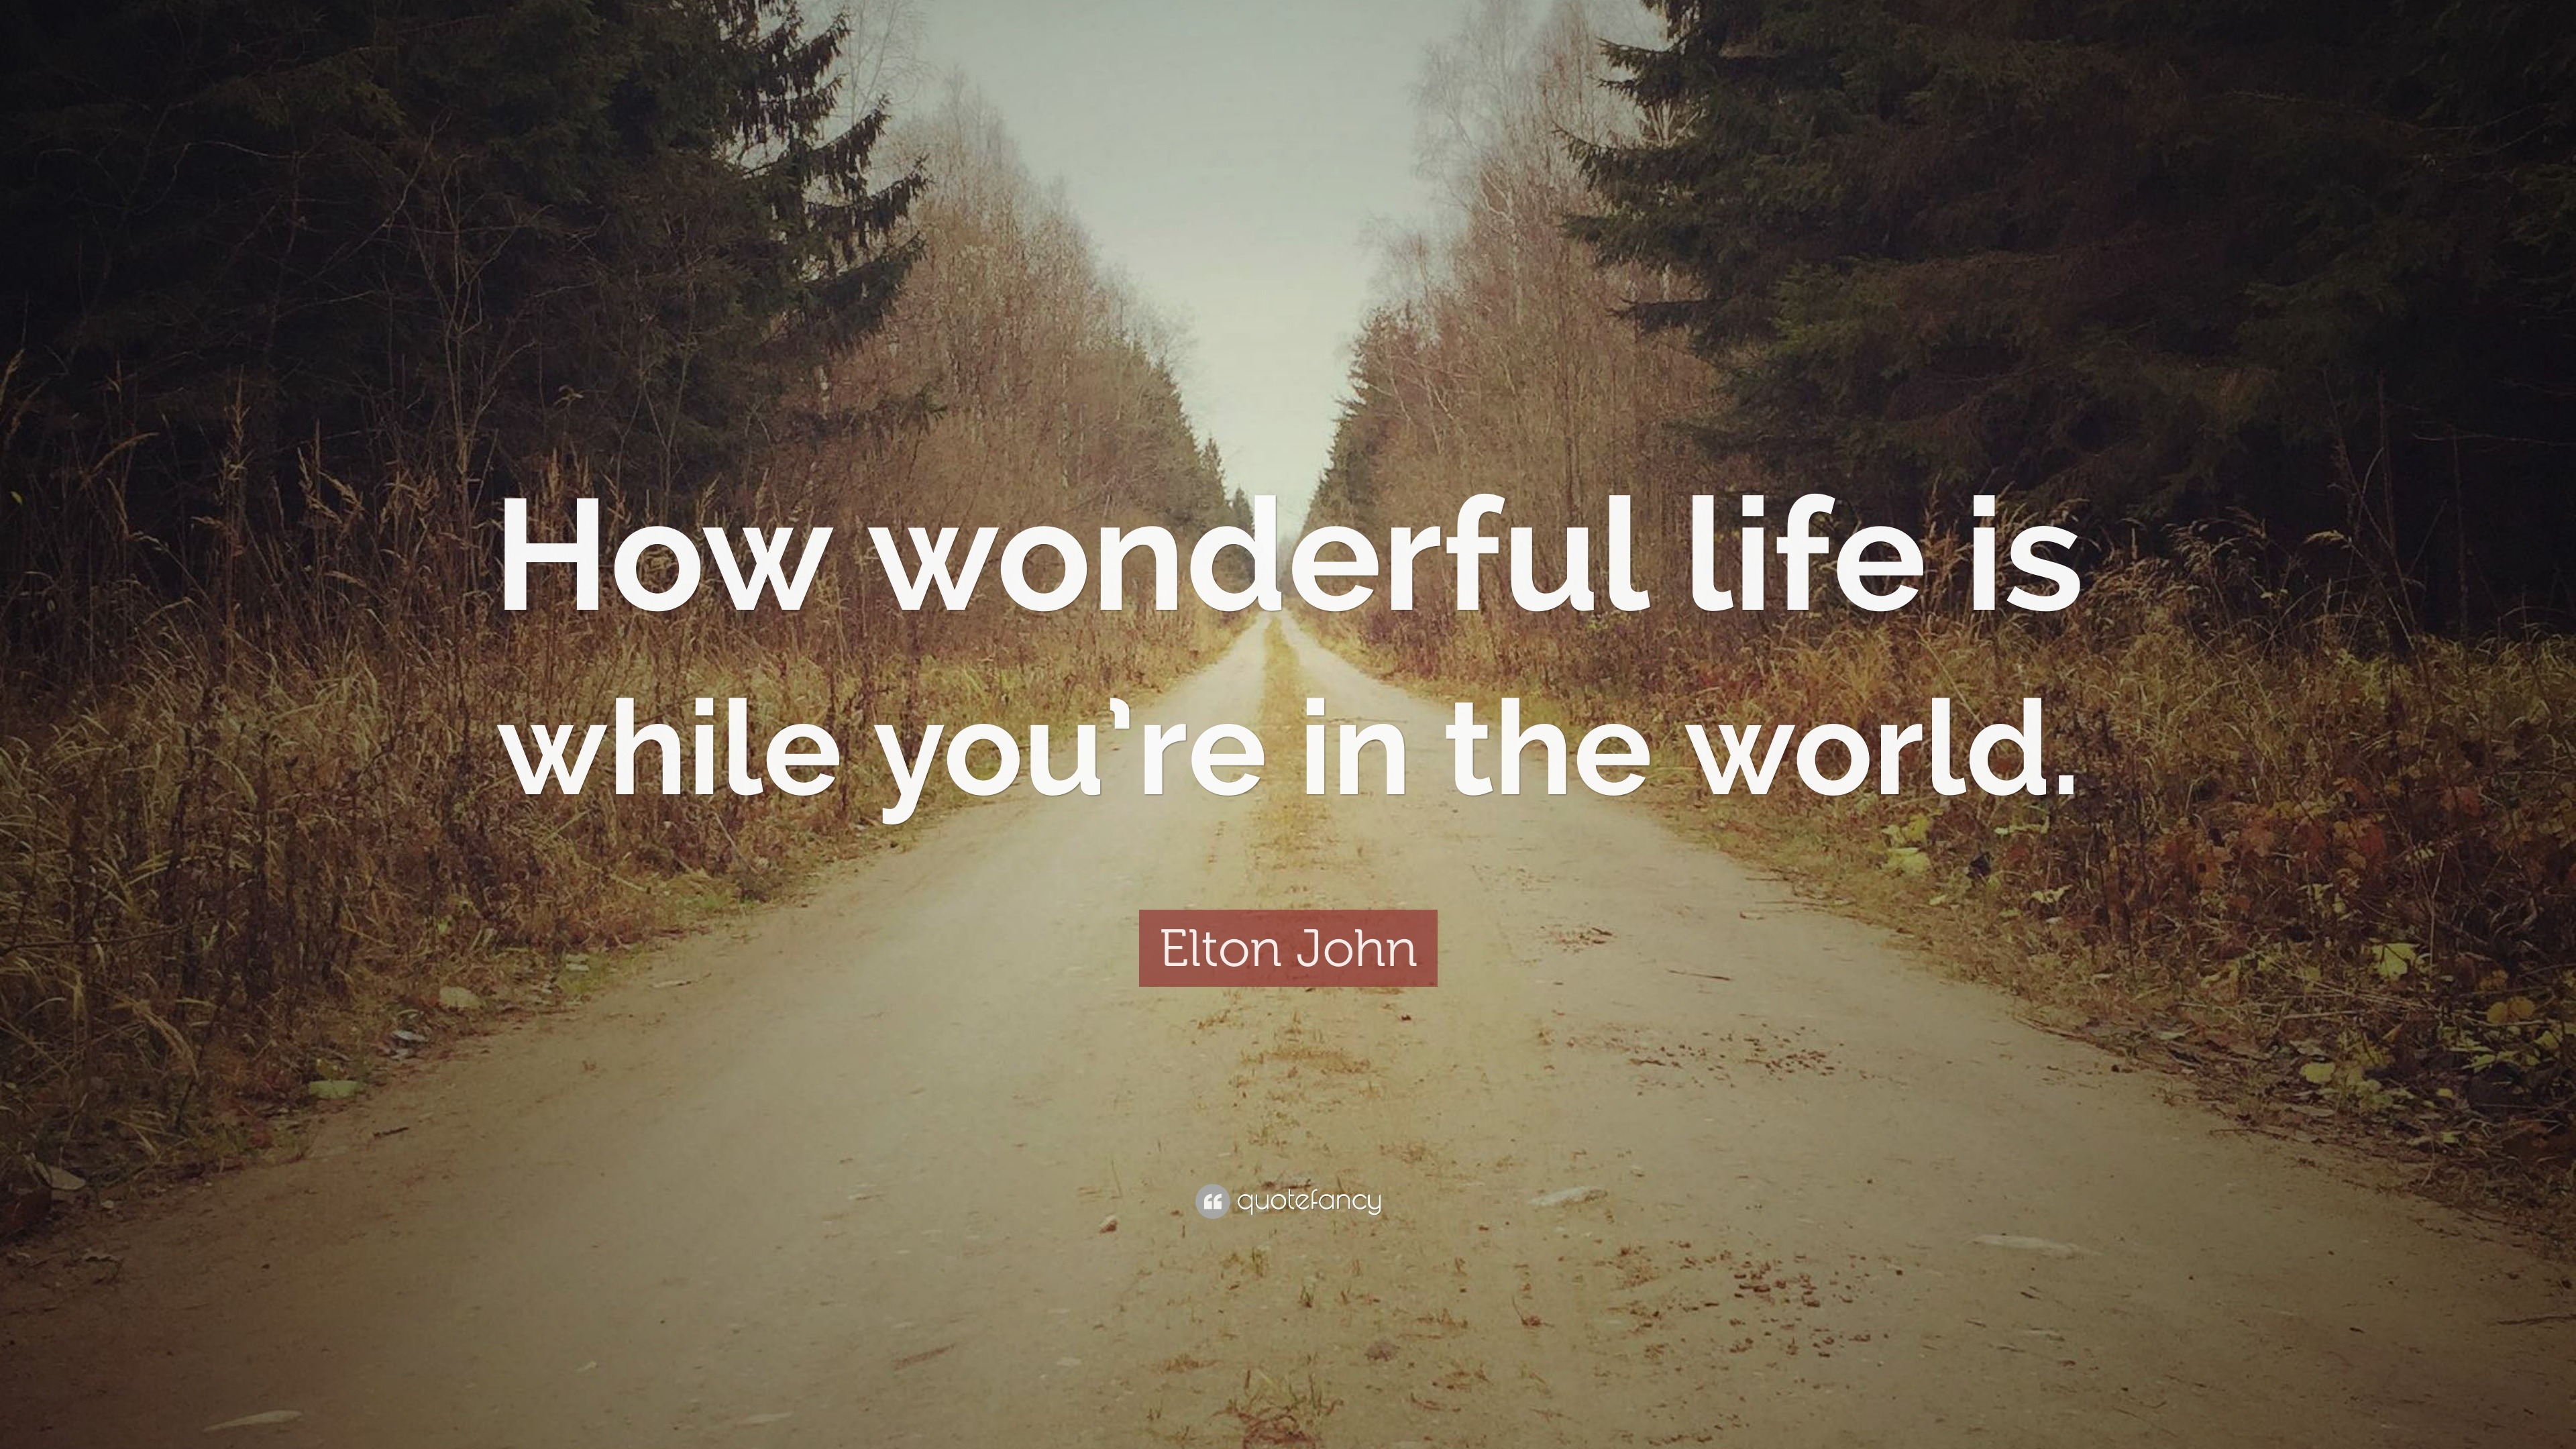 elton john how wonderful life is